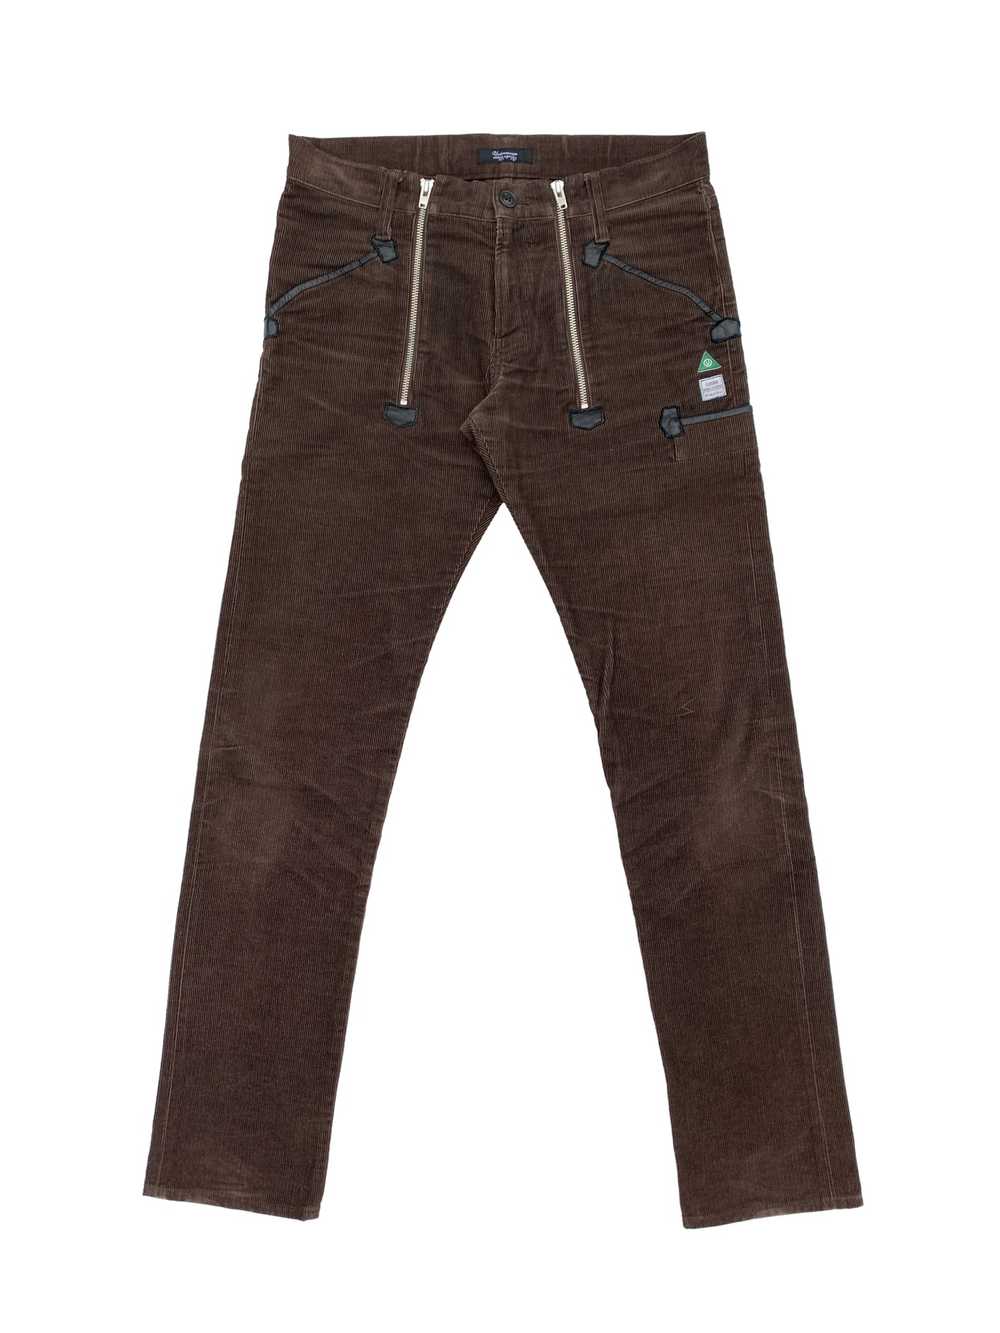 Undercover AW08 Double Zip Corduroy Pants - image 1